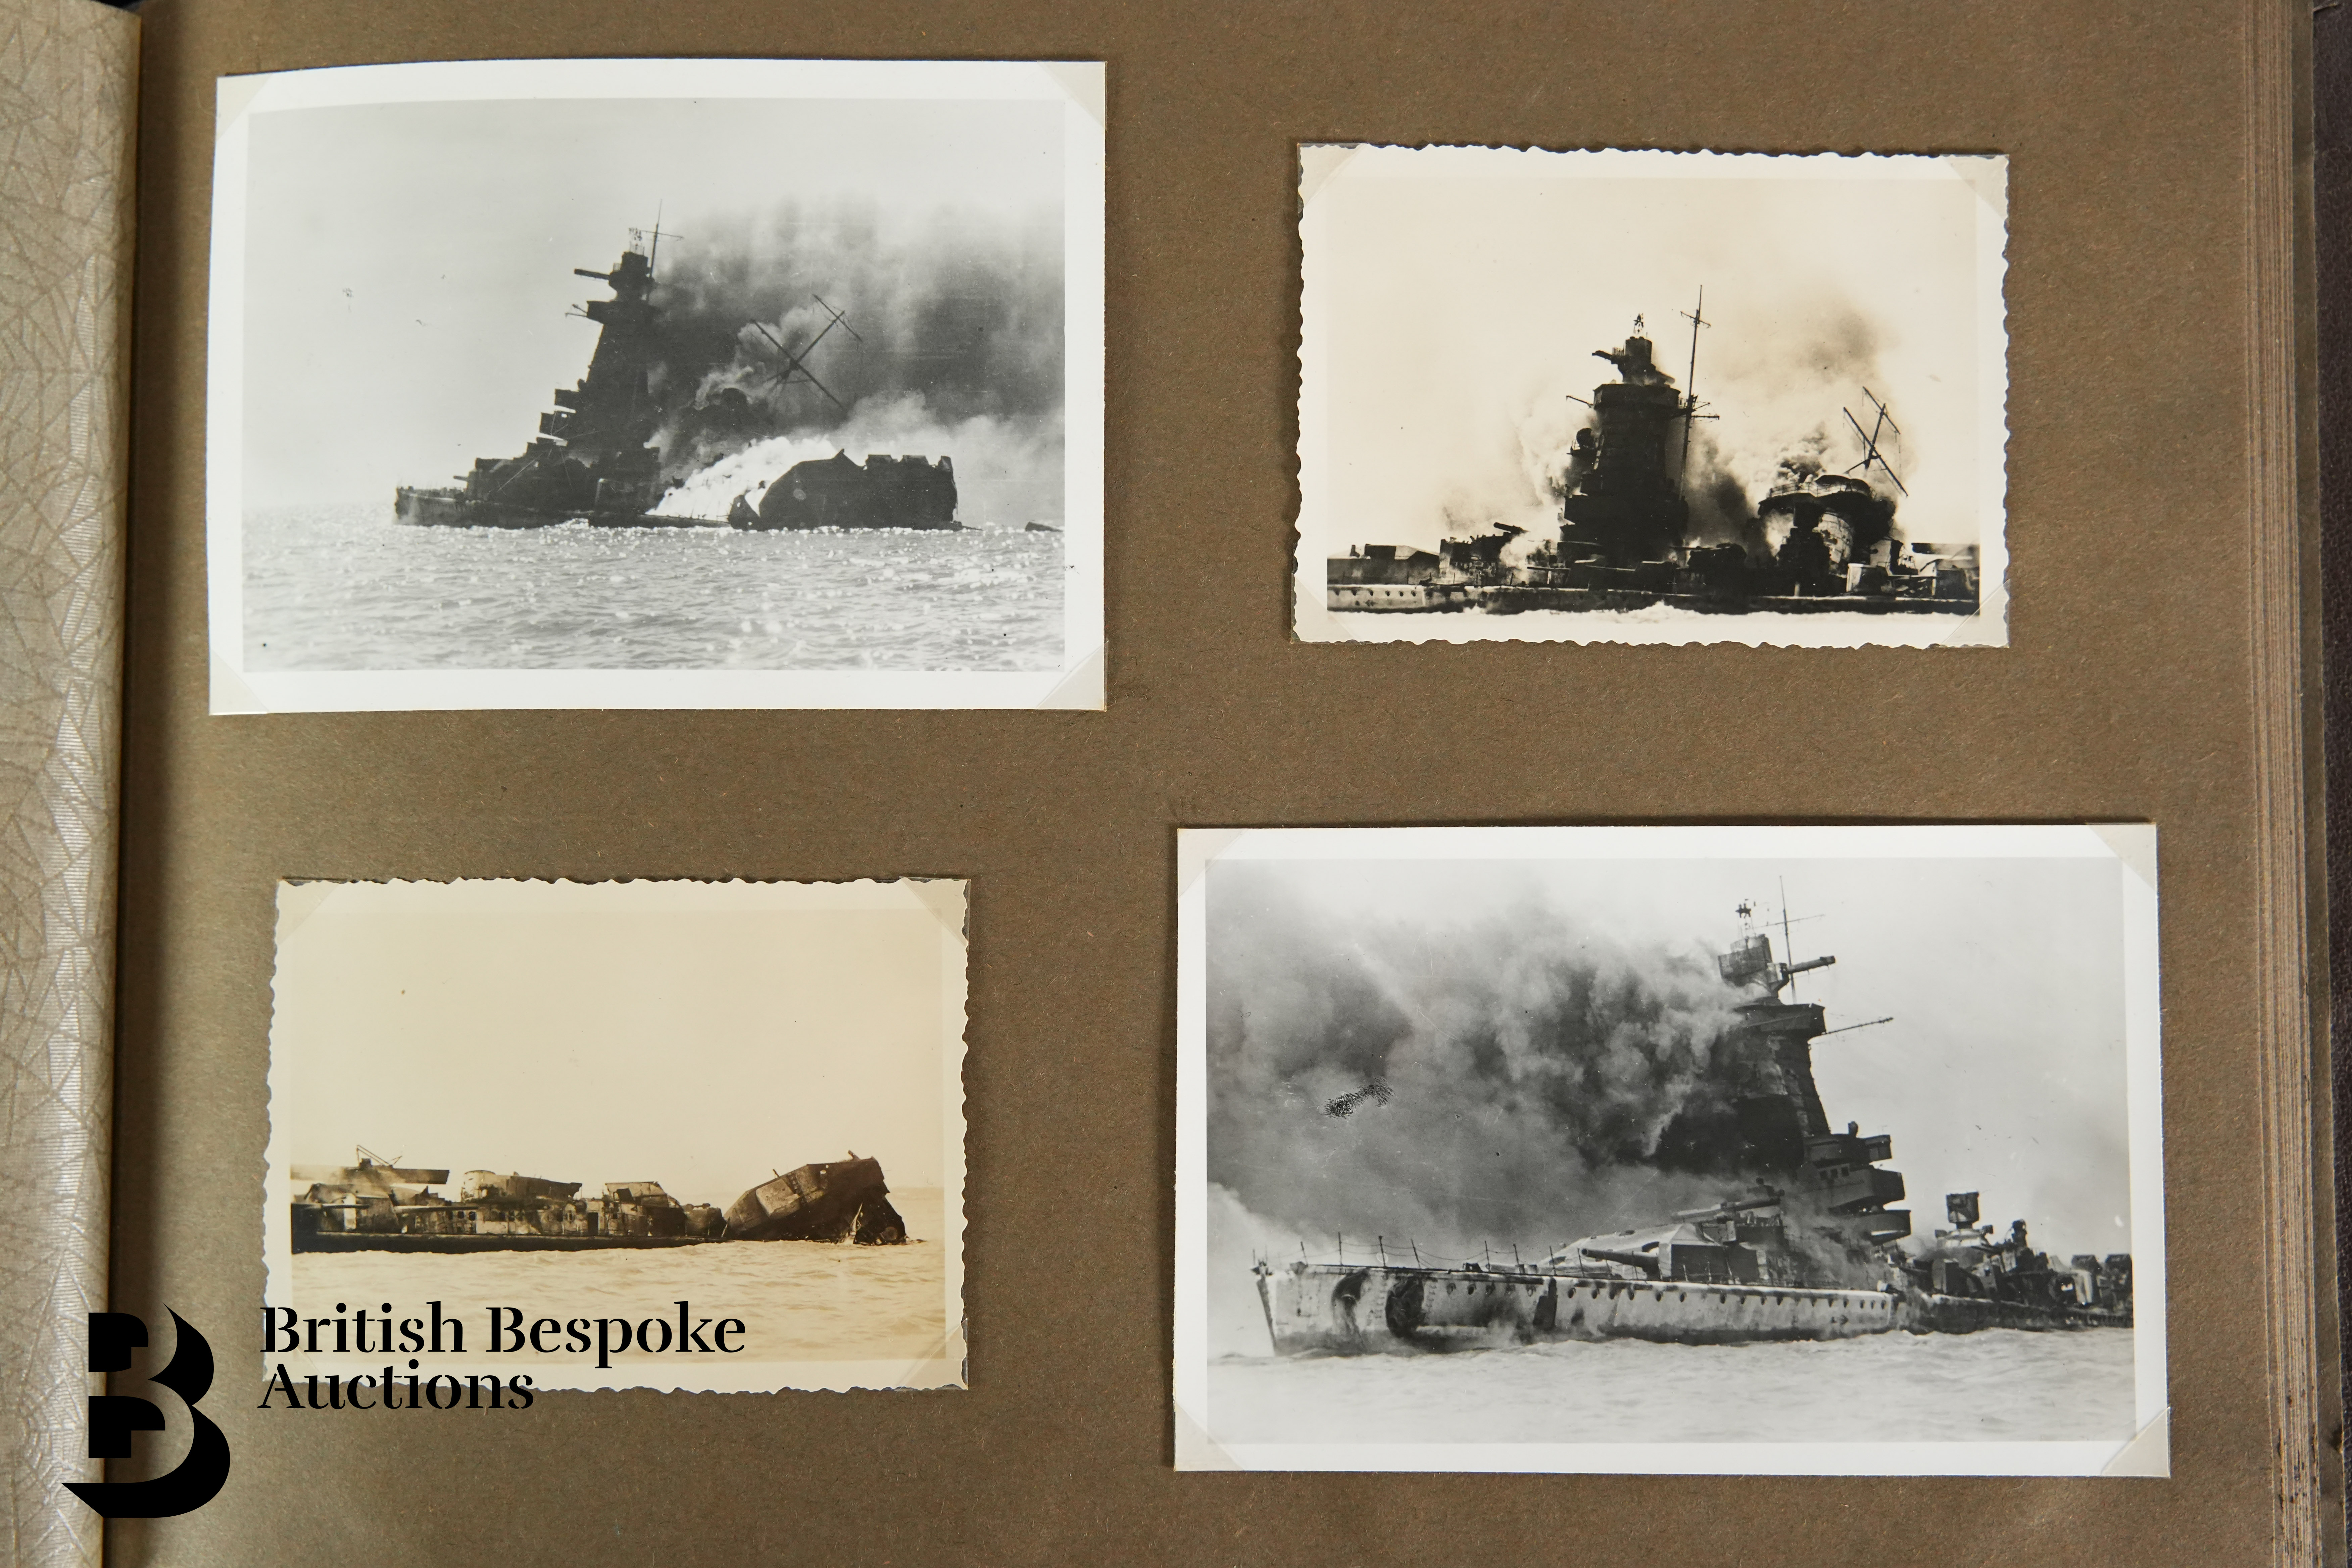 Graf Spee (Pocket Battleship) Interest, incl. Photographs, Documents, Miscellanea - Image 10 of 126